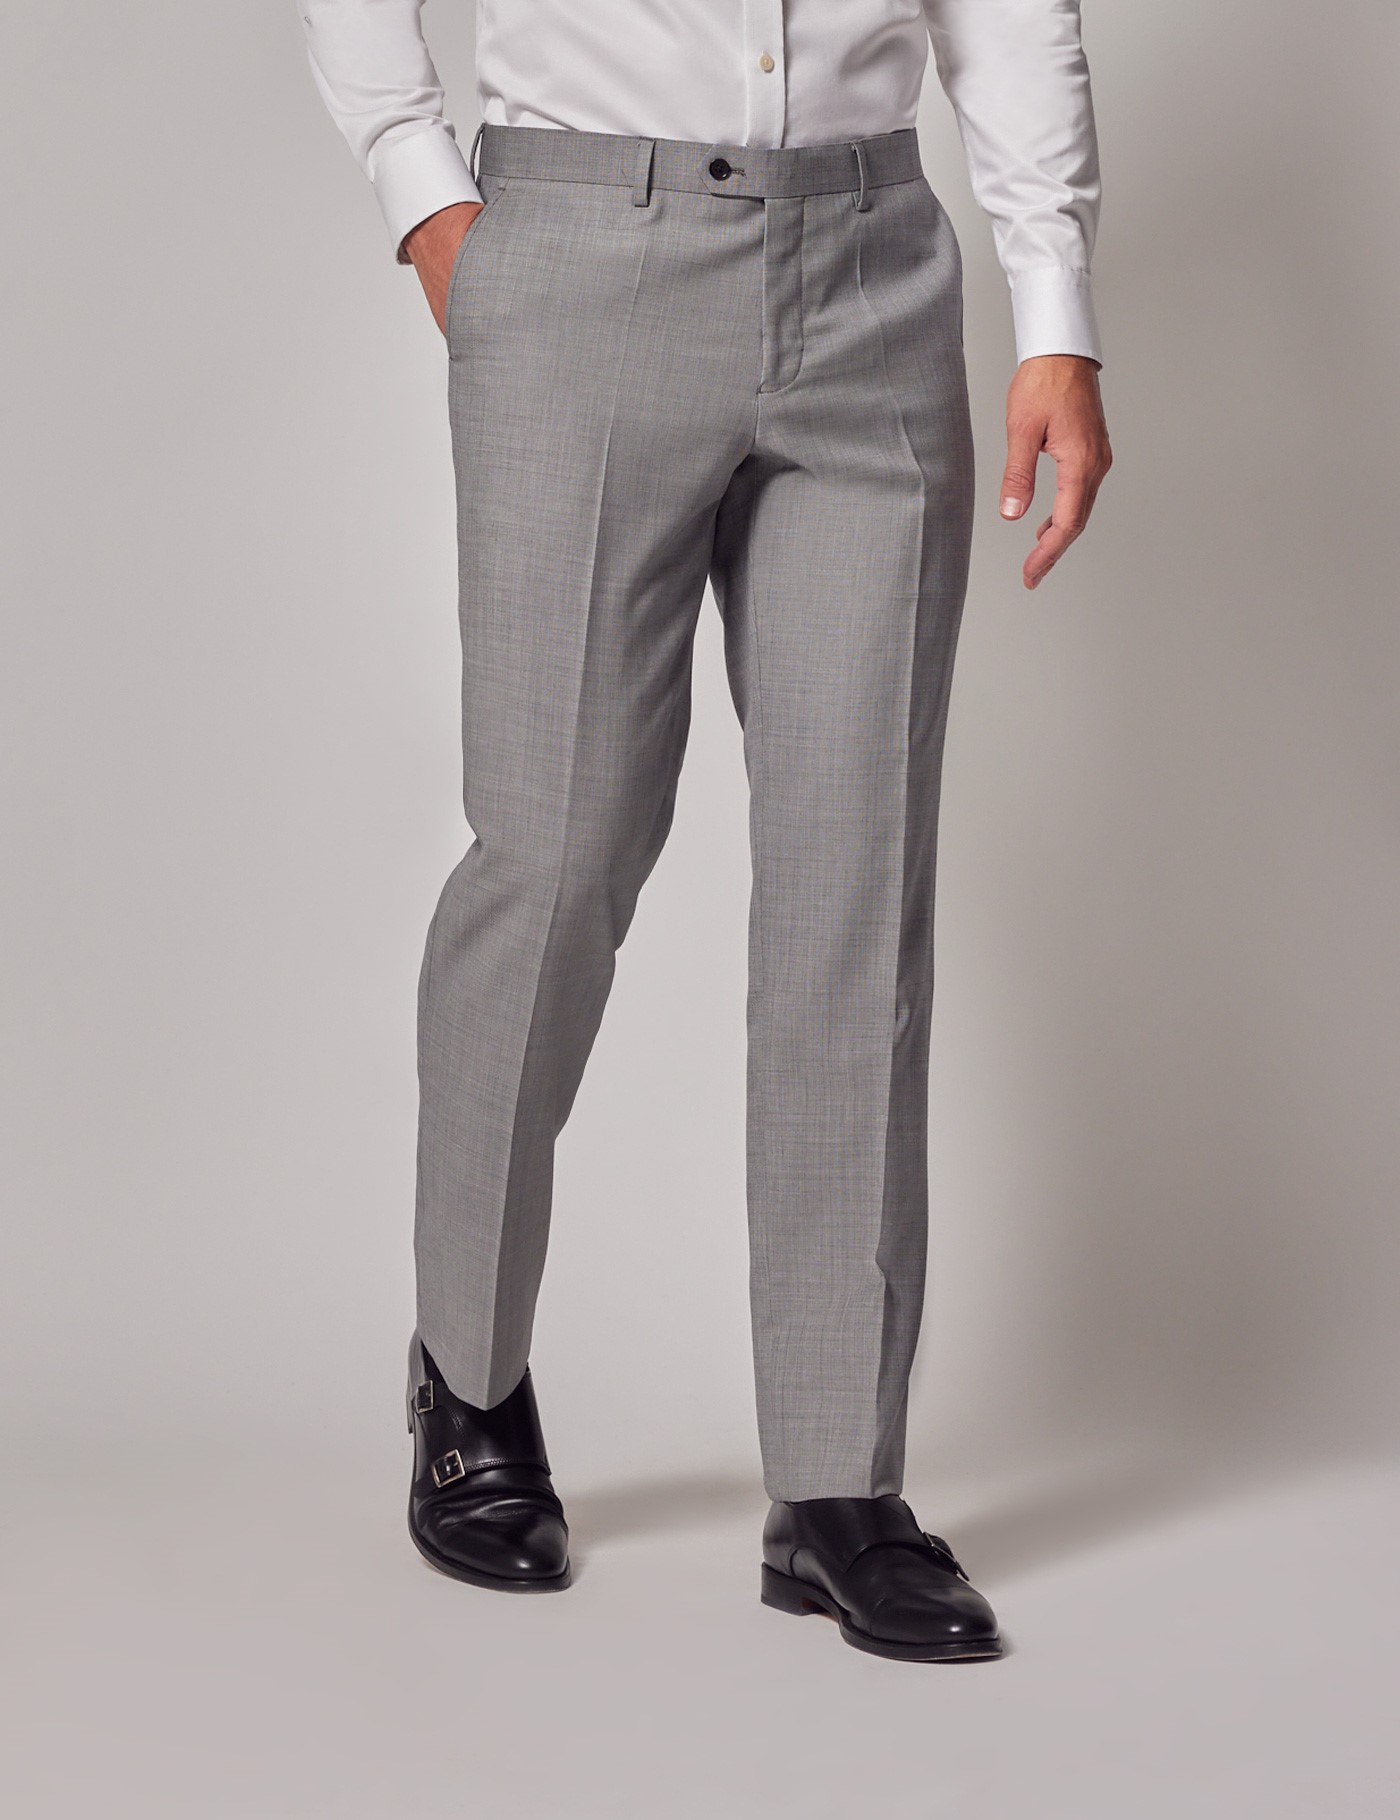 light gray dress pants